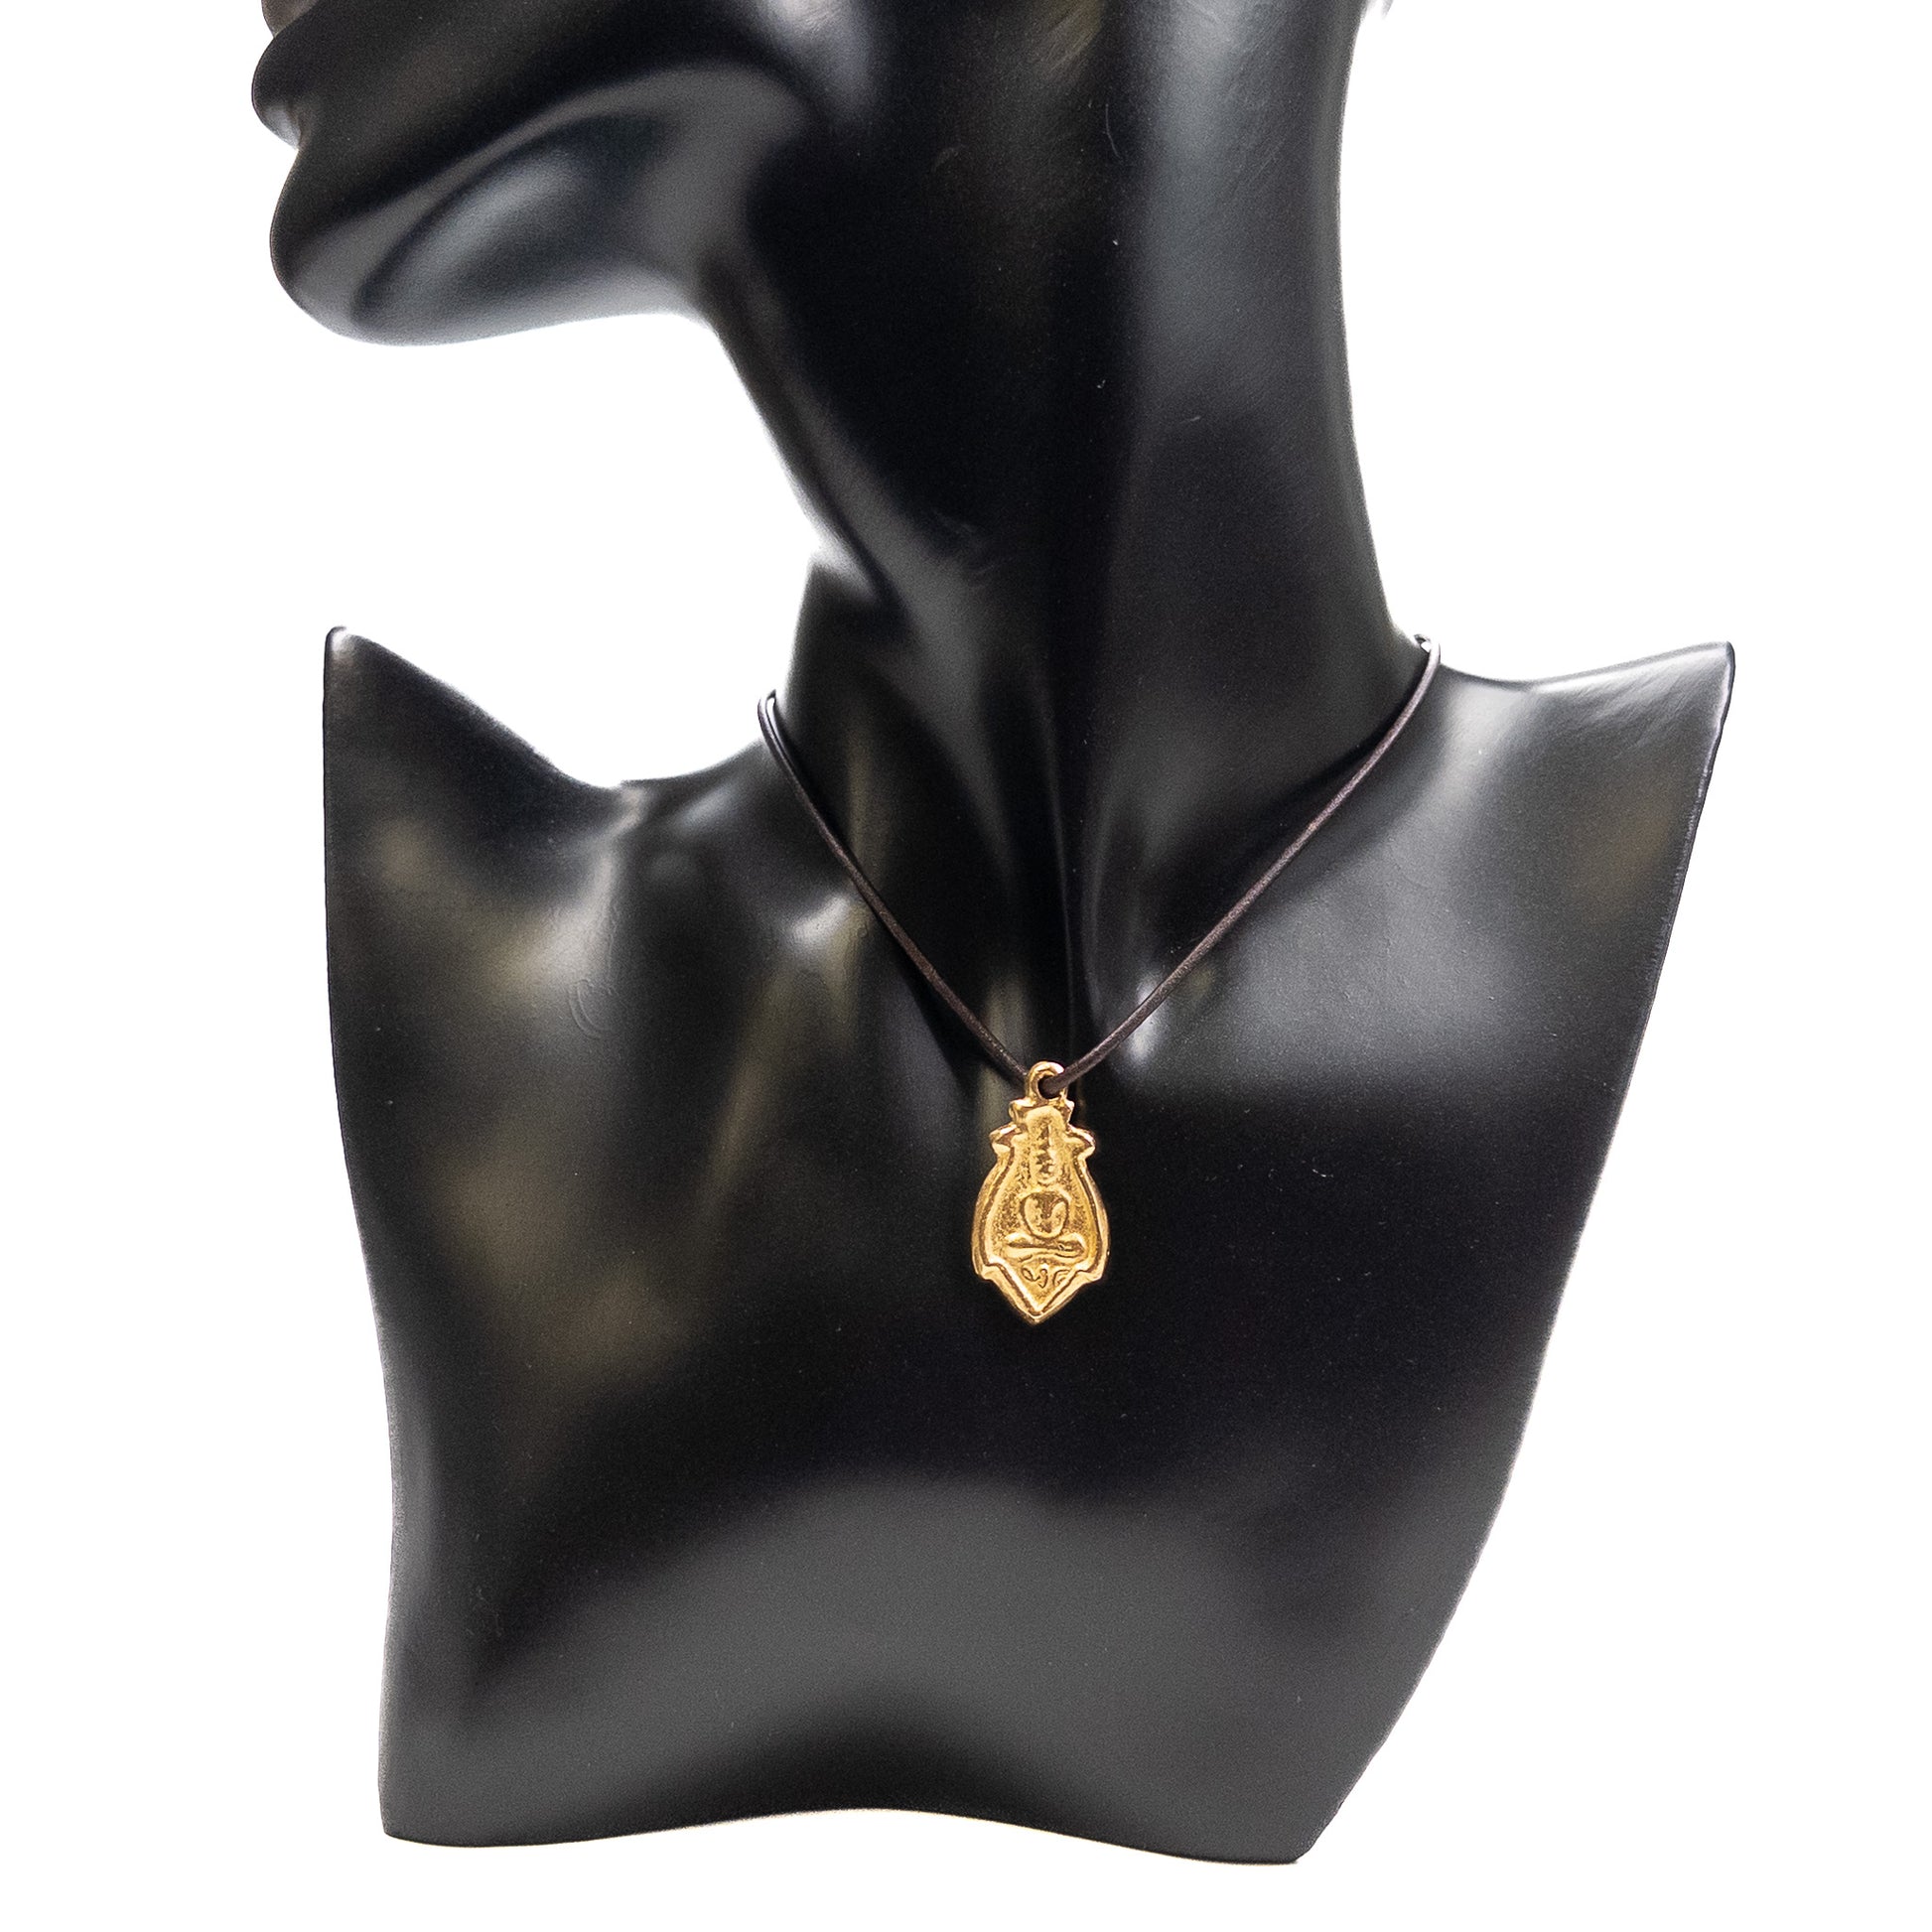 Rustic Seated Buddha Pendant (Gold Plated Brass) - 1 pc.-The Bead Gallery Honolulu